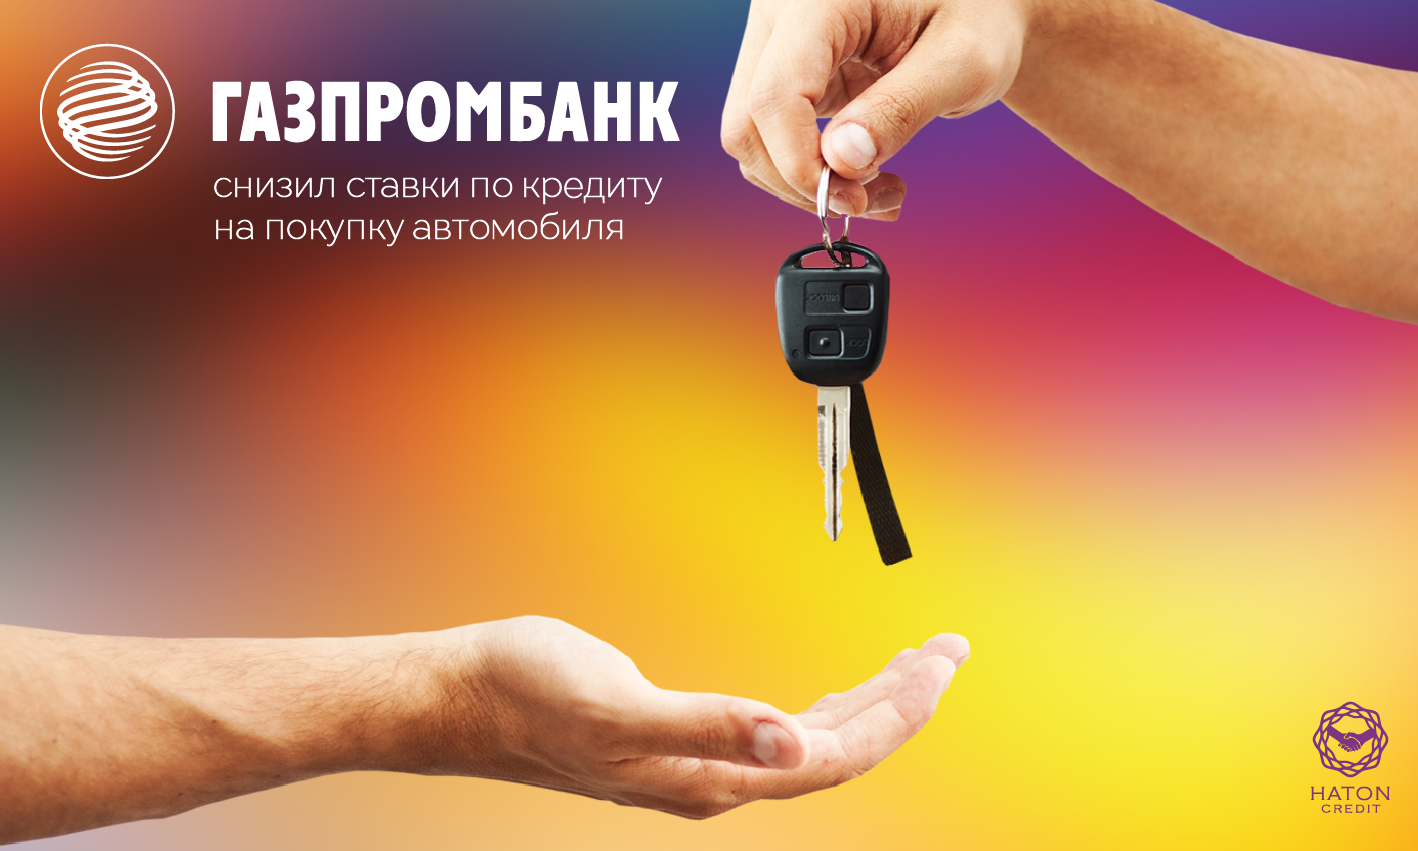 Газпромбанк снизил ставки по кредиту на покупку автомобиля.